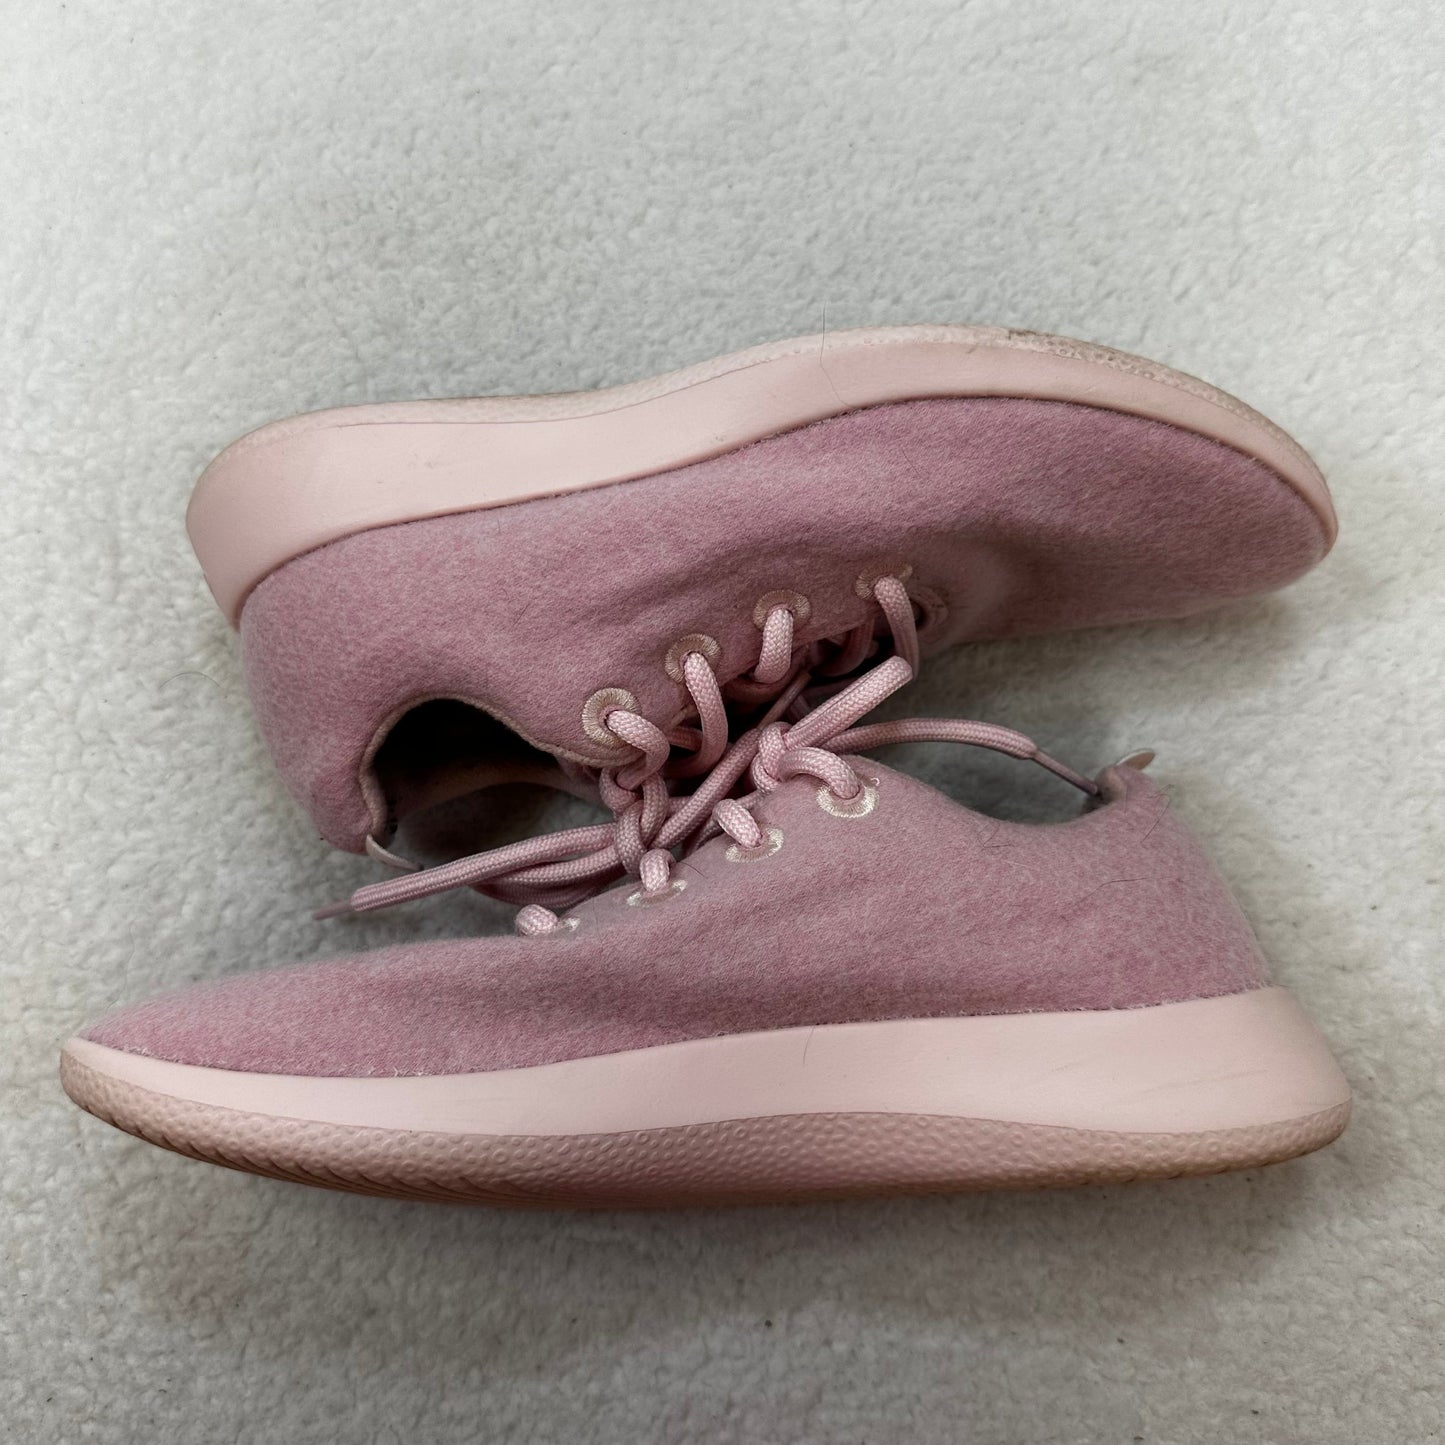 Pink Shoes Athletic ALLBIRDS Size 9